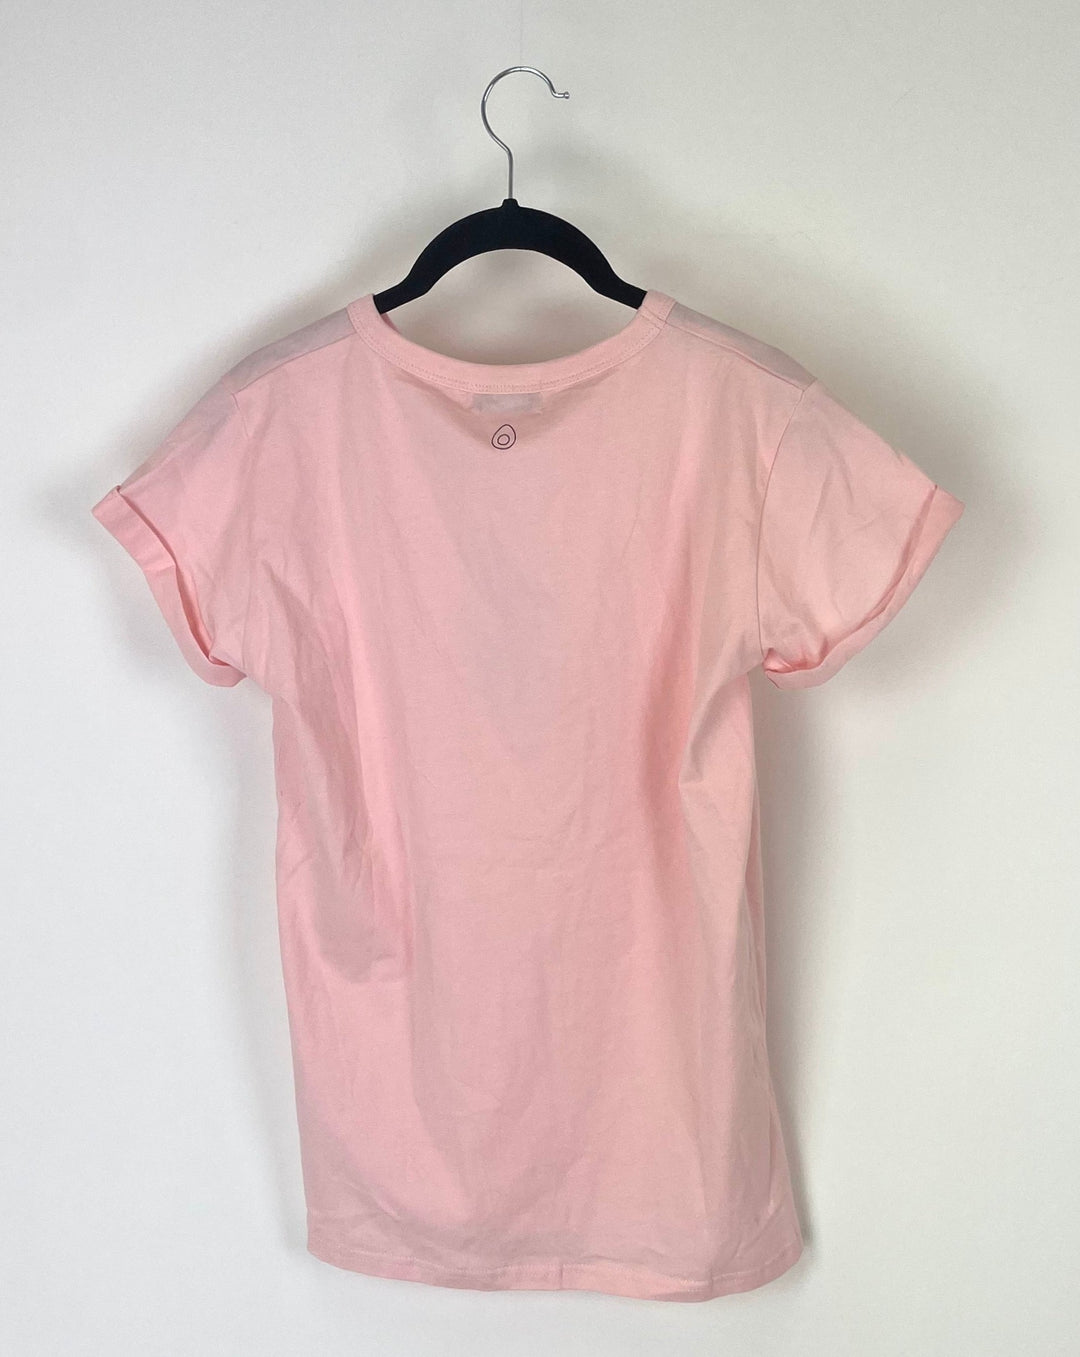 Pink Avocado Toast T-Shirt - Size 2/4